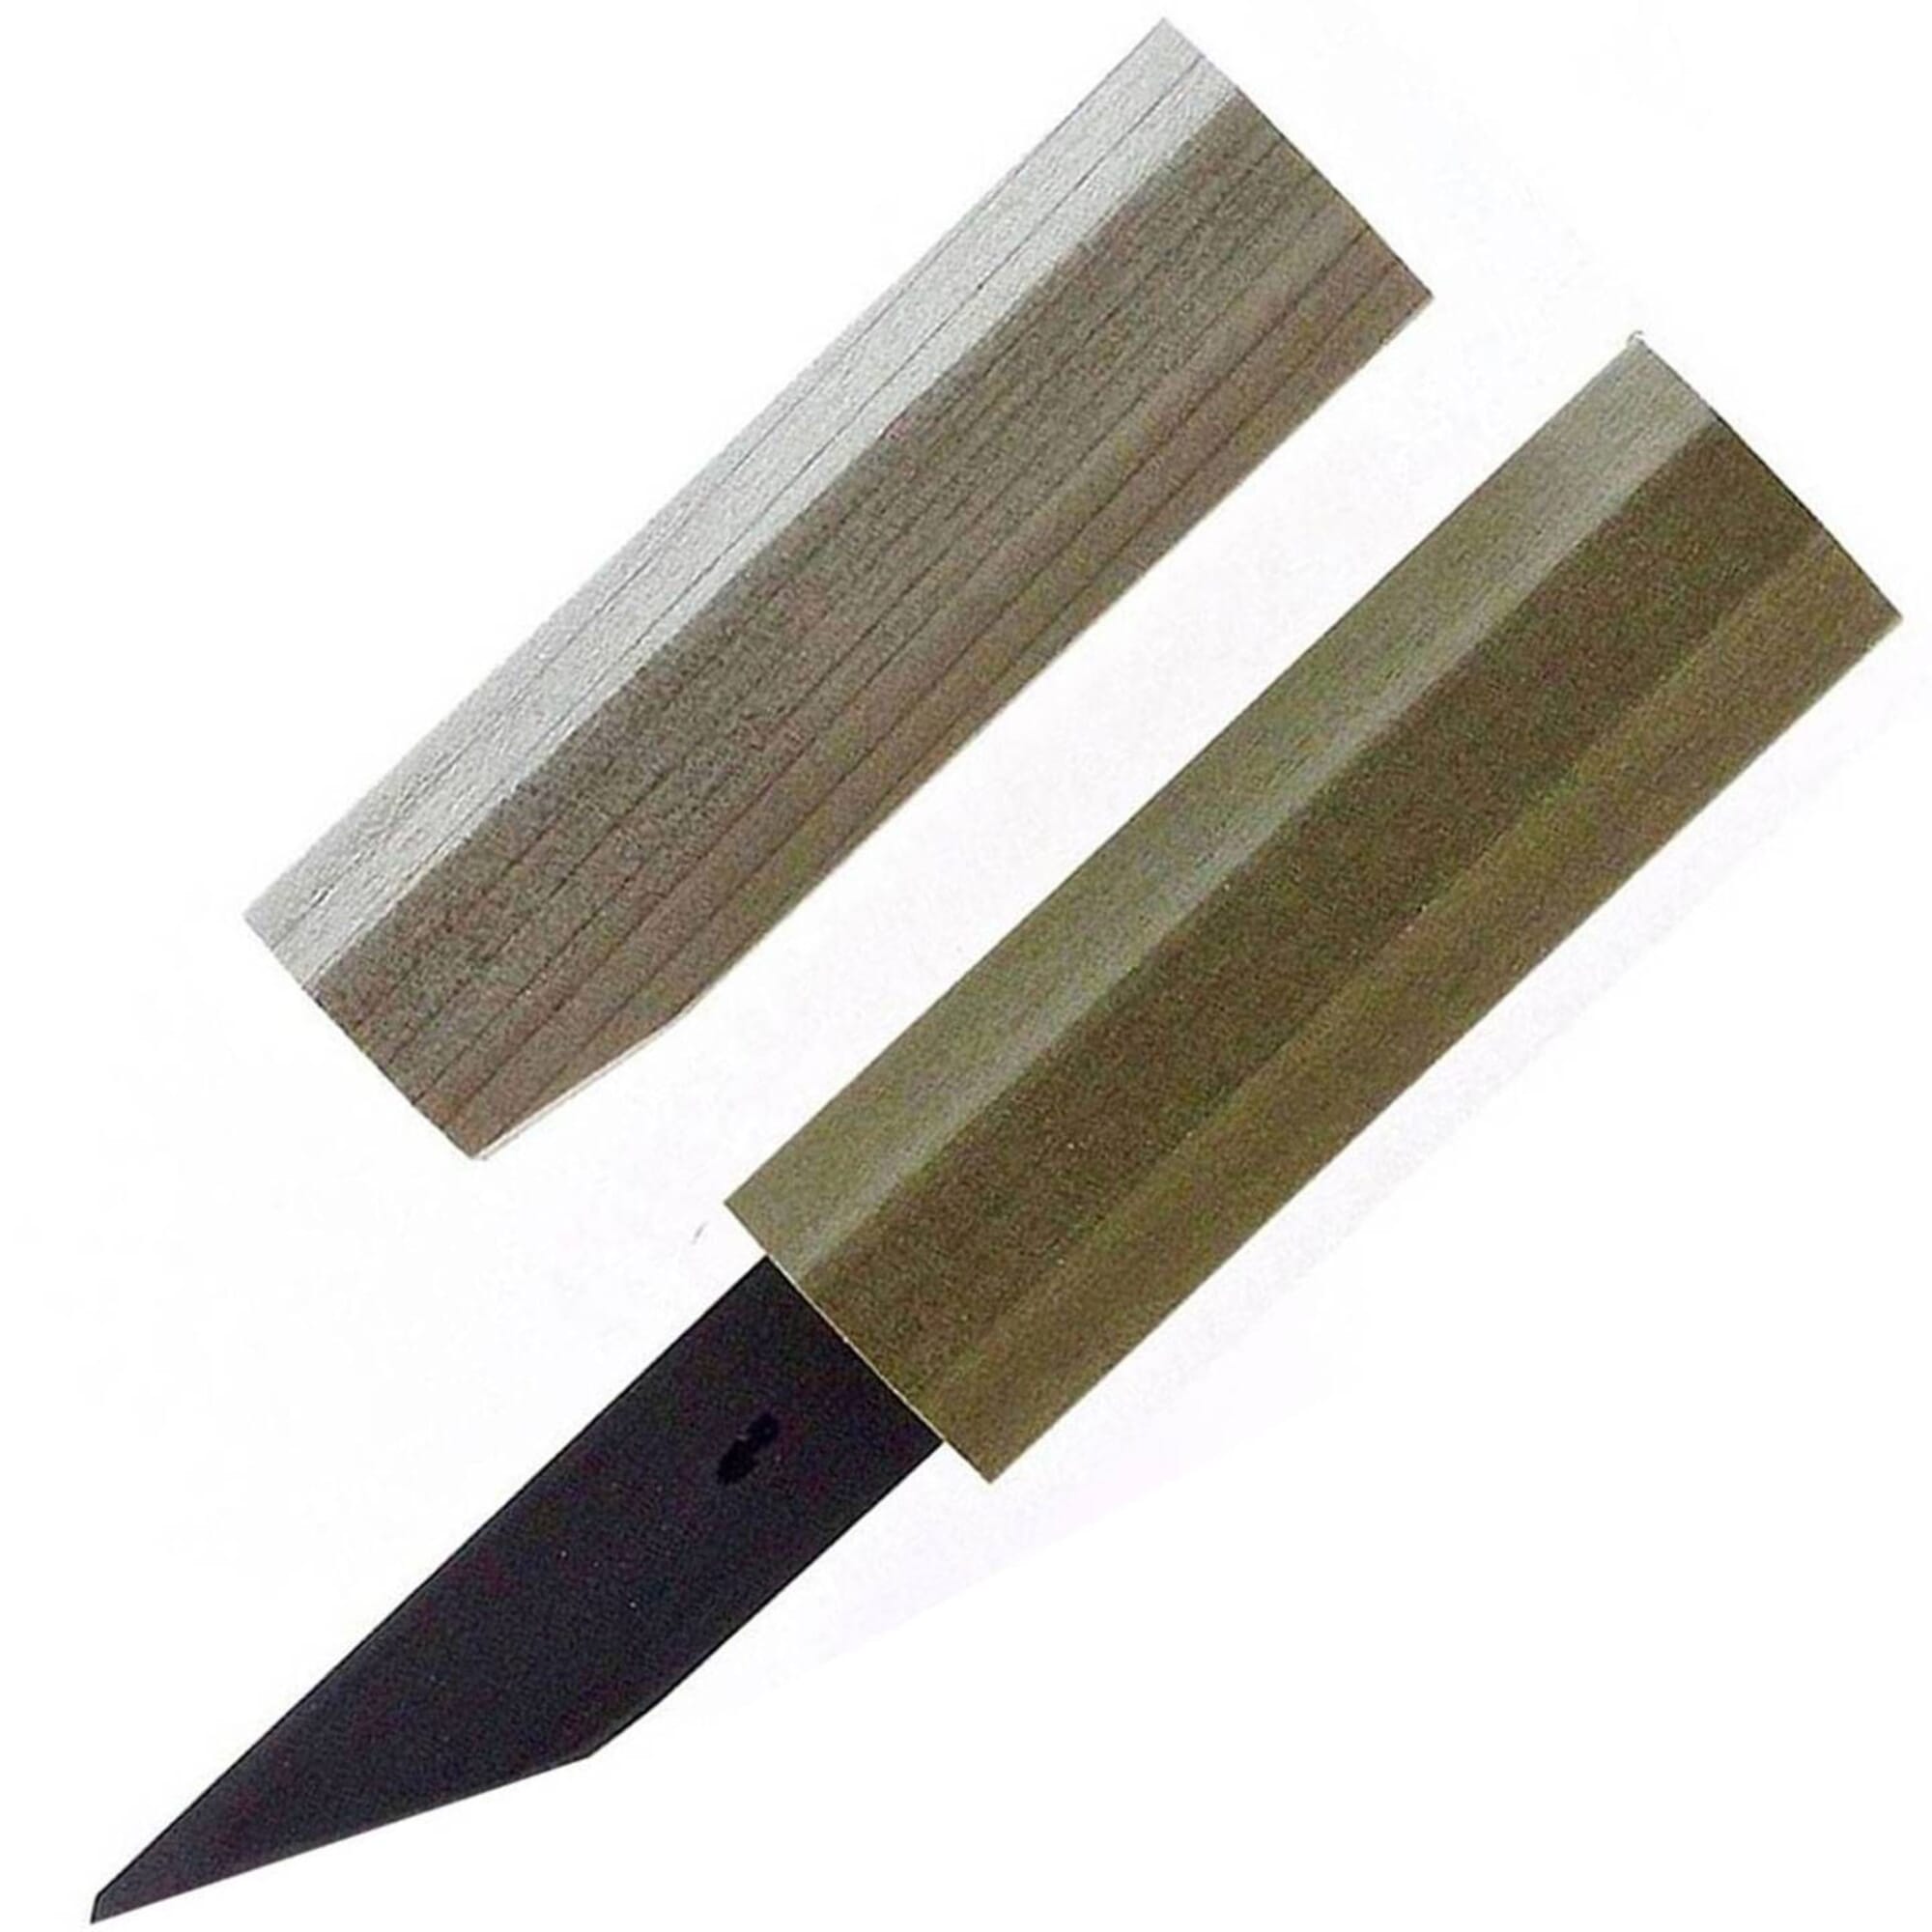 wood carving knife handles